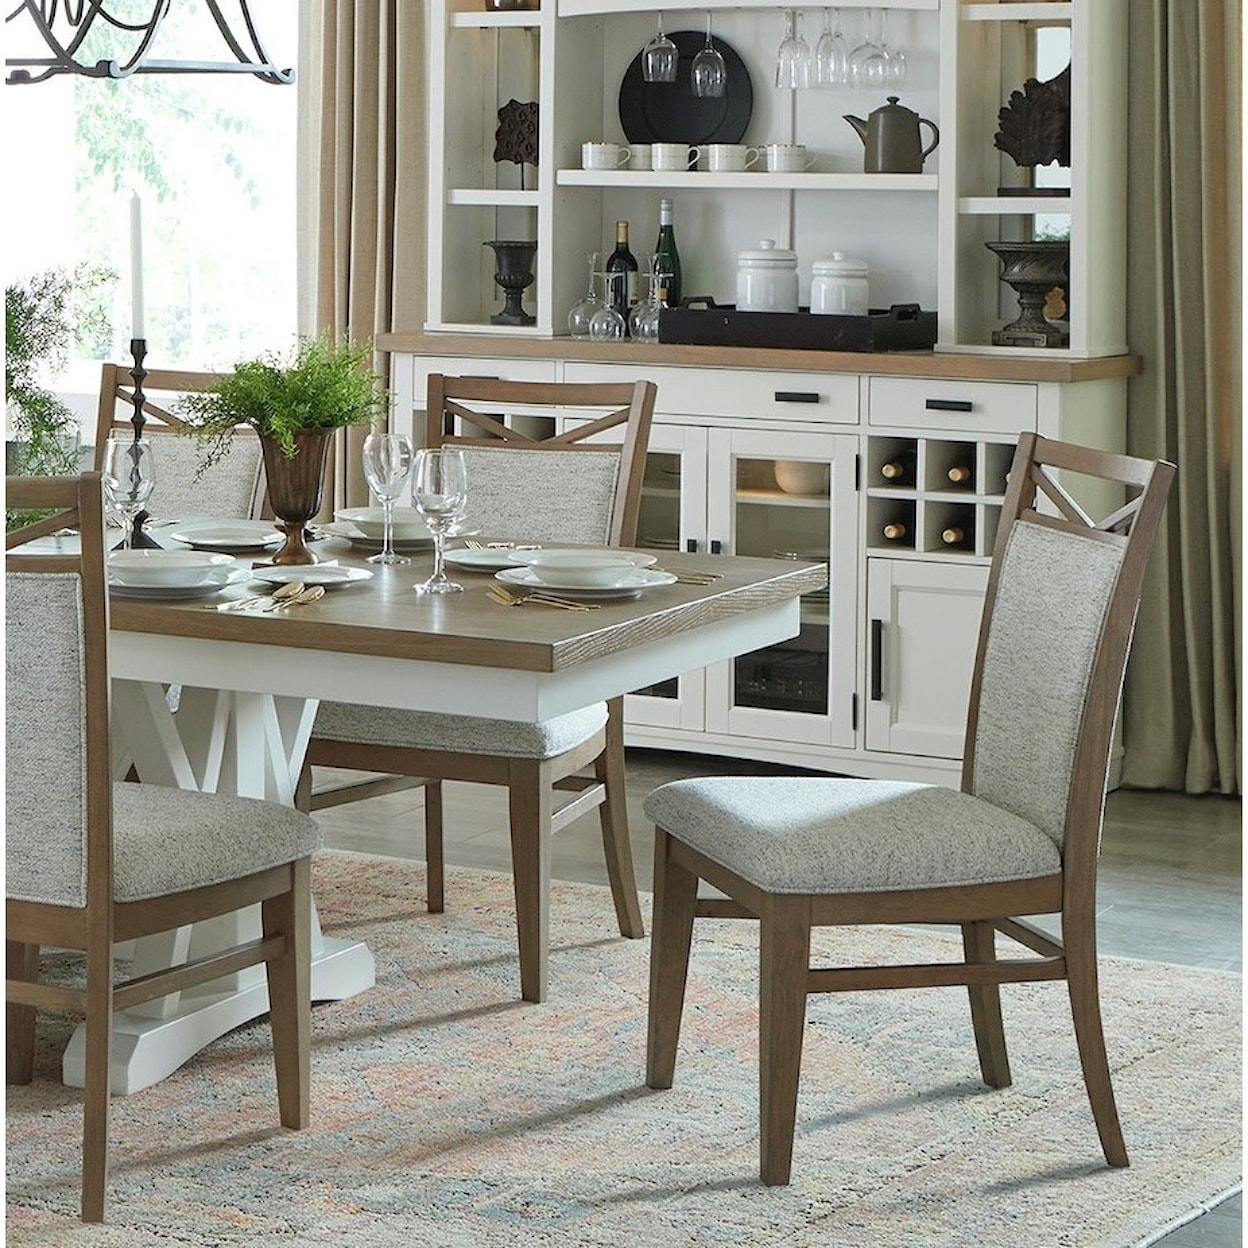 Carolina House Americana Modern Dining Chair Upholstered